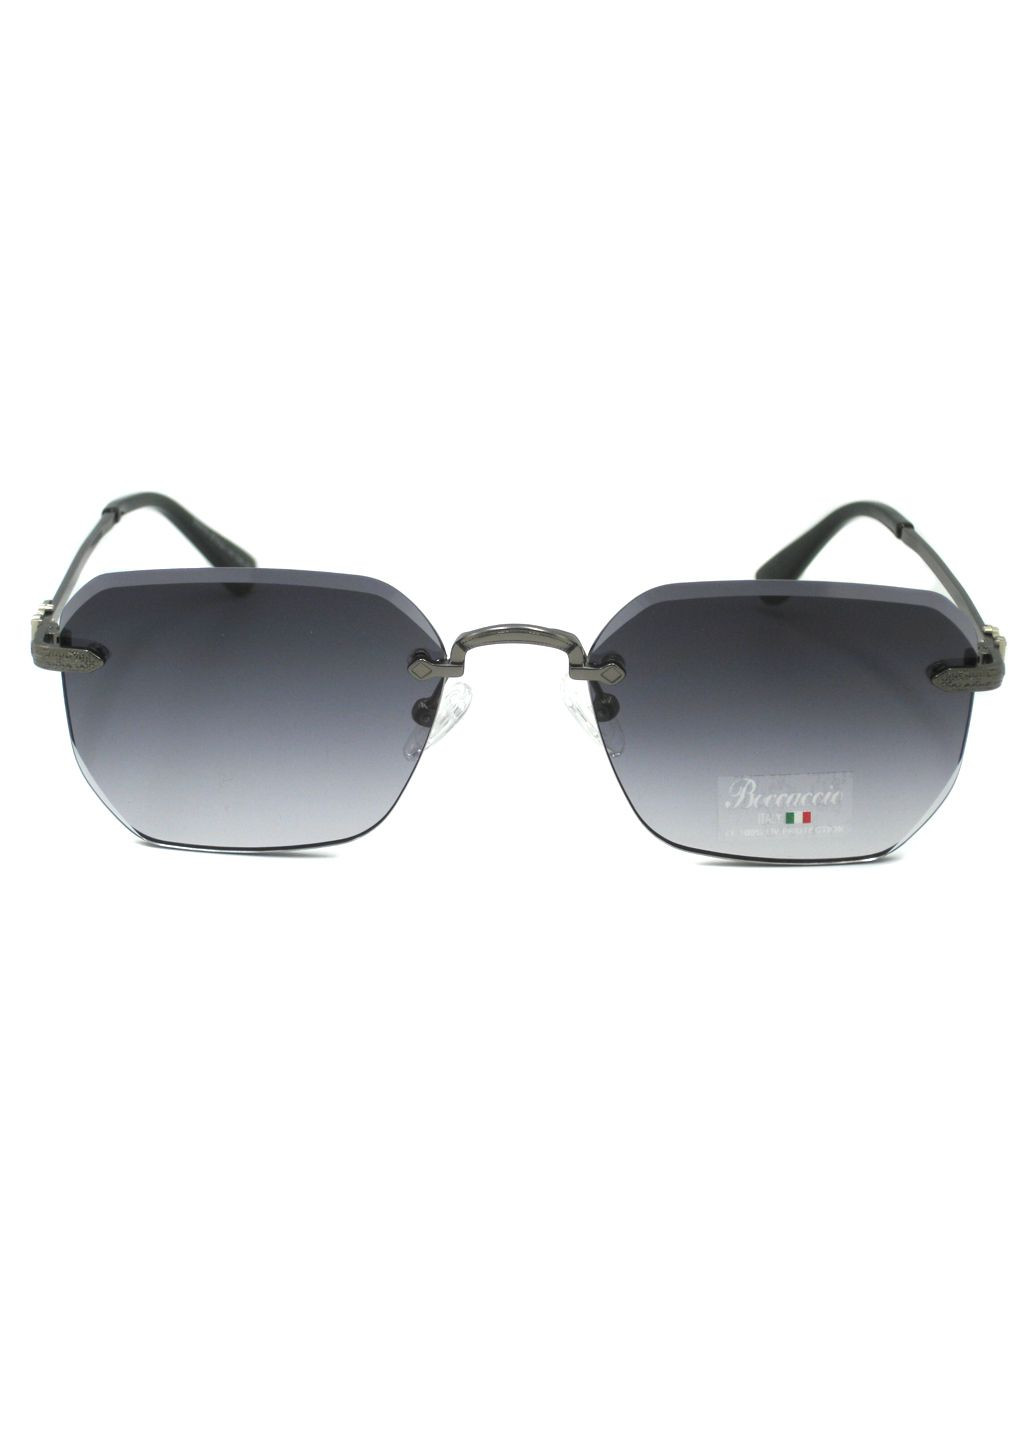 Сонцезахиснi окуляри Boccaccio bcs33170 (291398678)